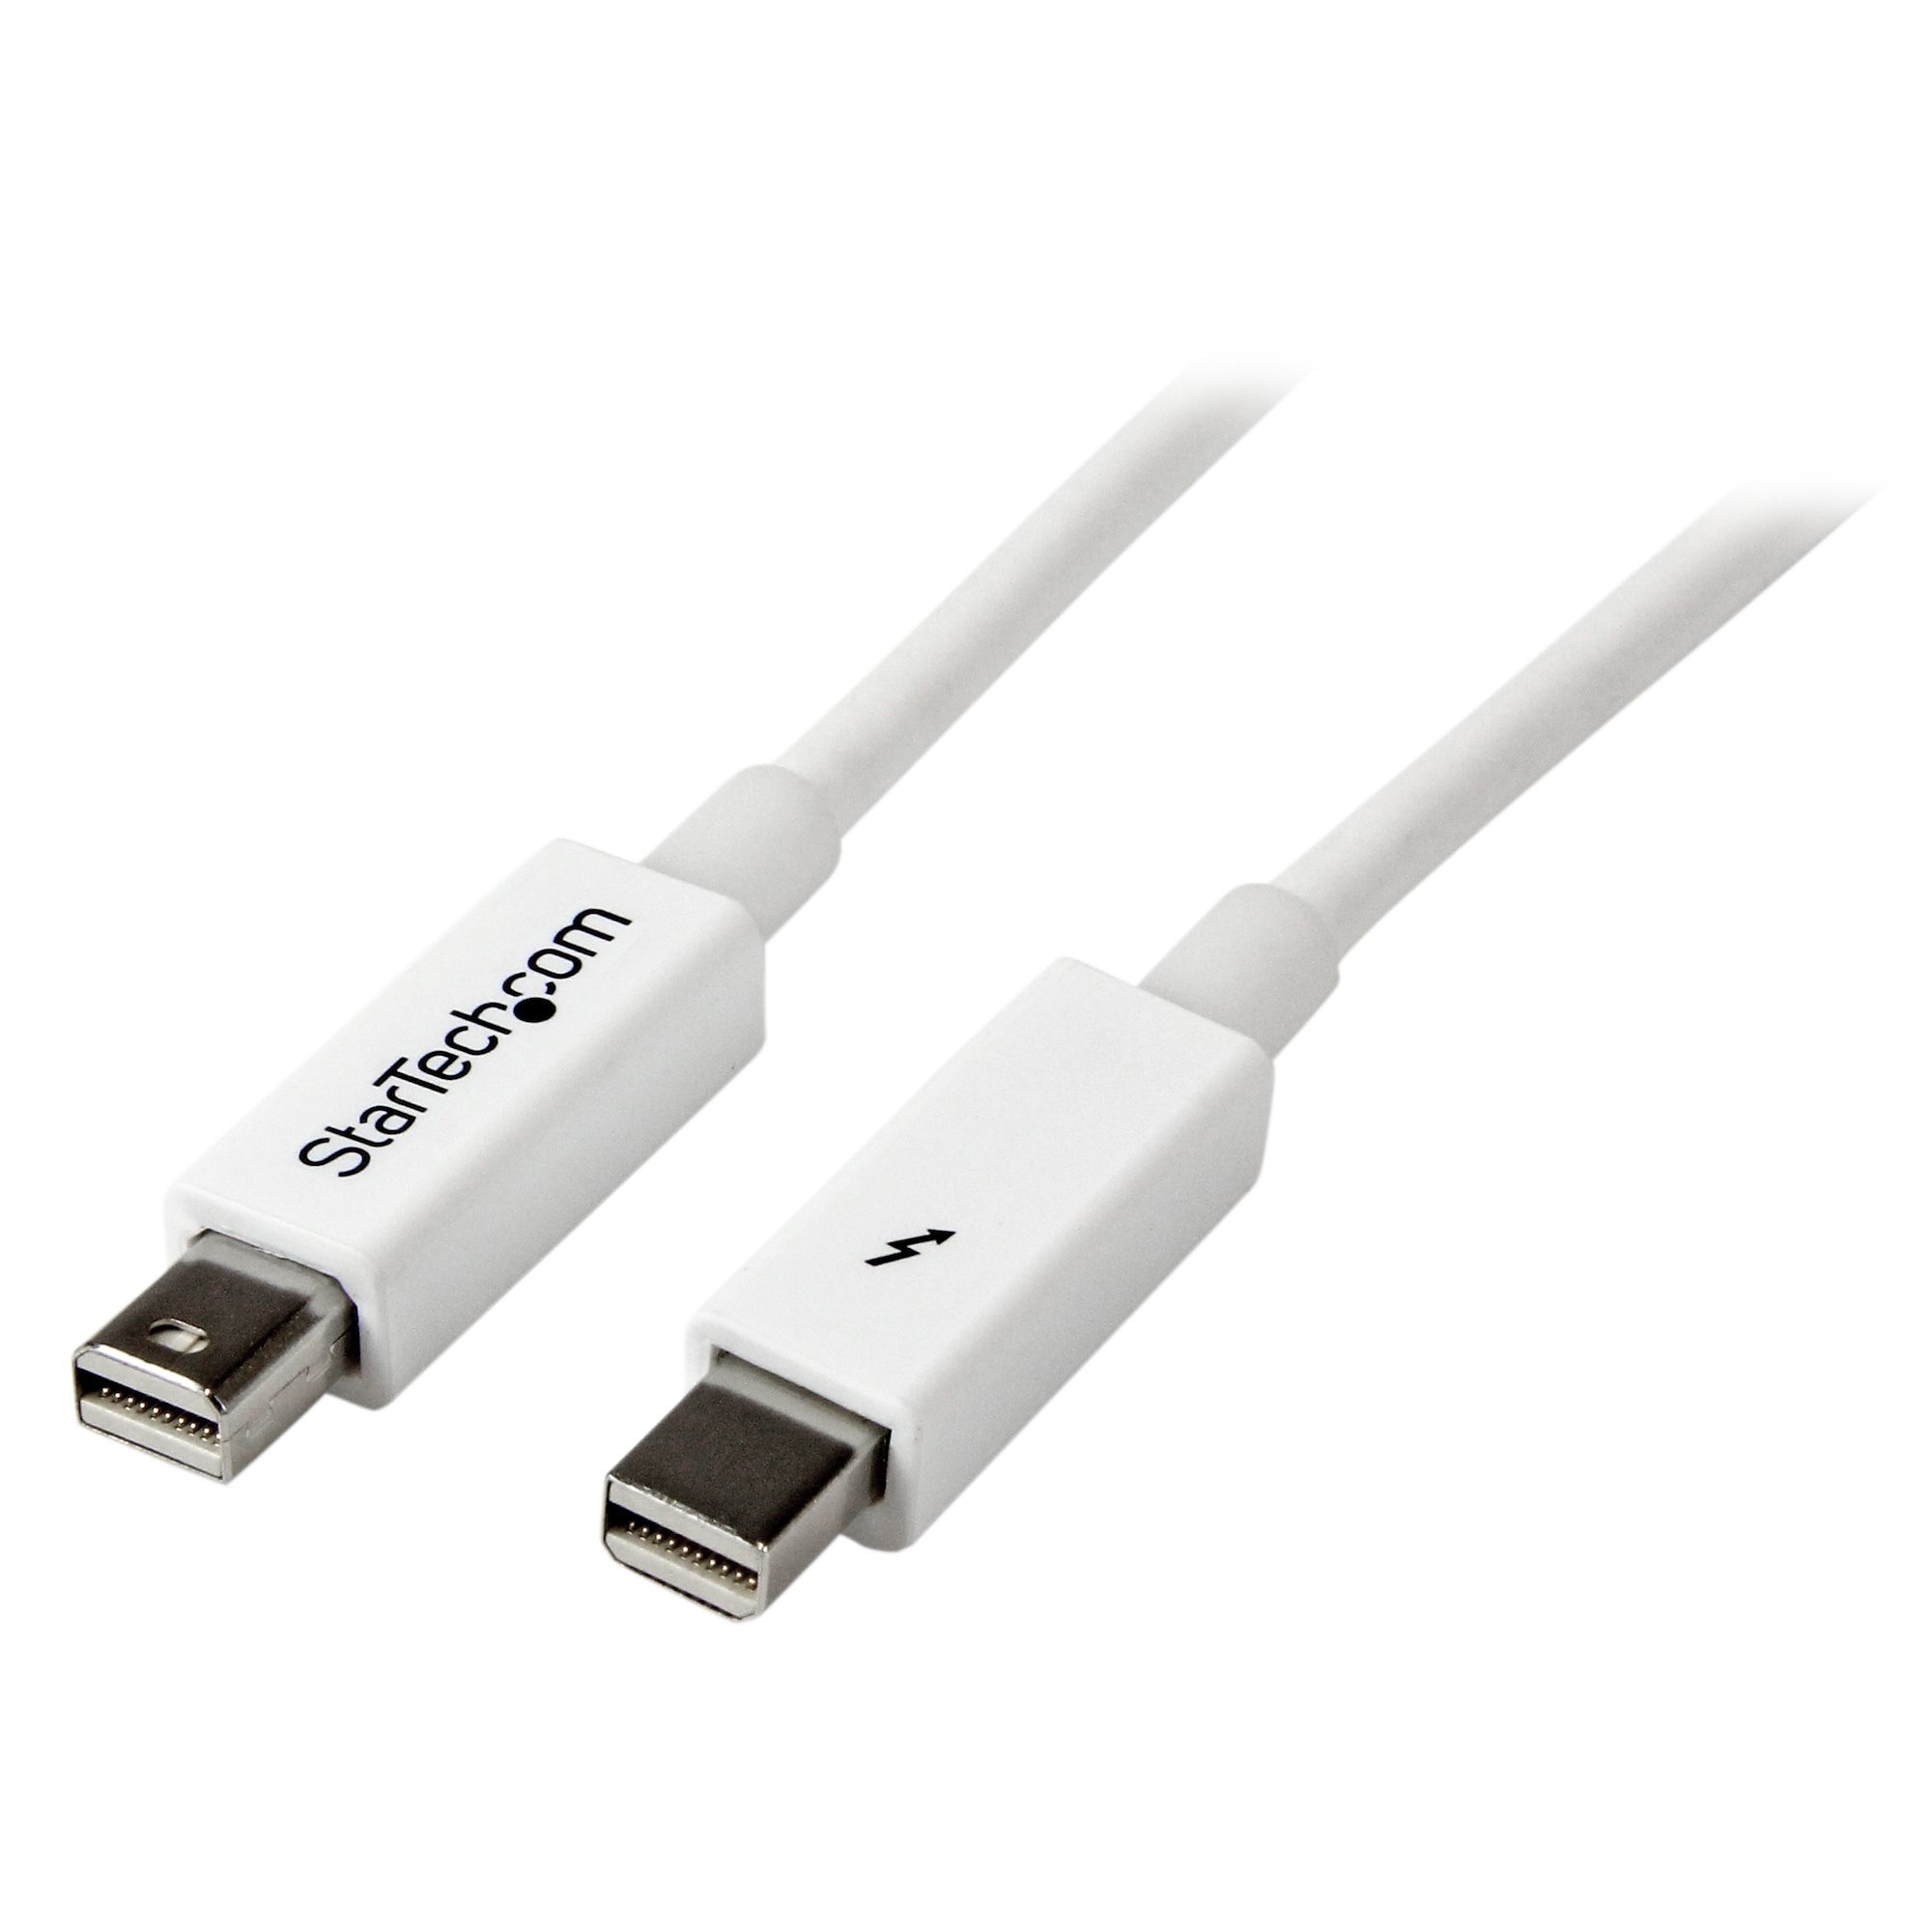 StarTech Thunderbolt Cable M/M (White, 2m)